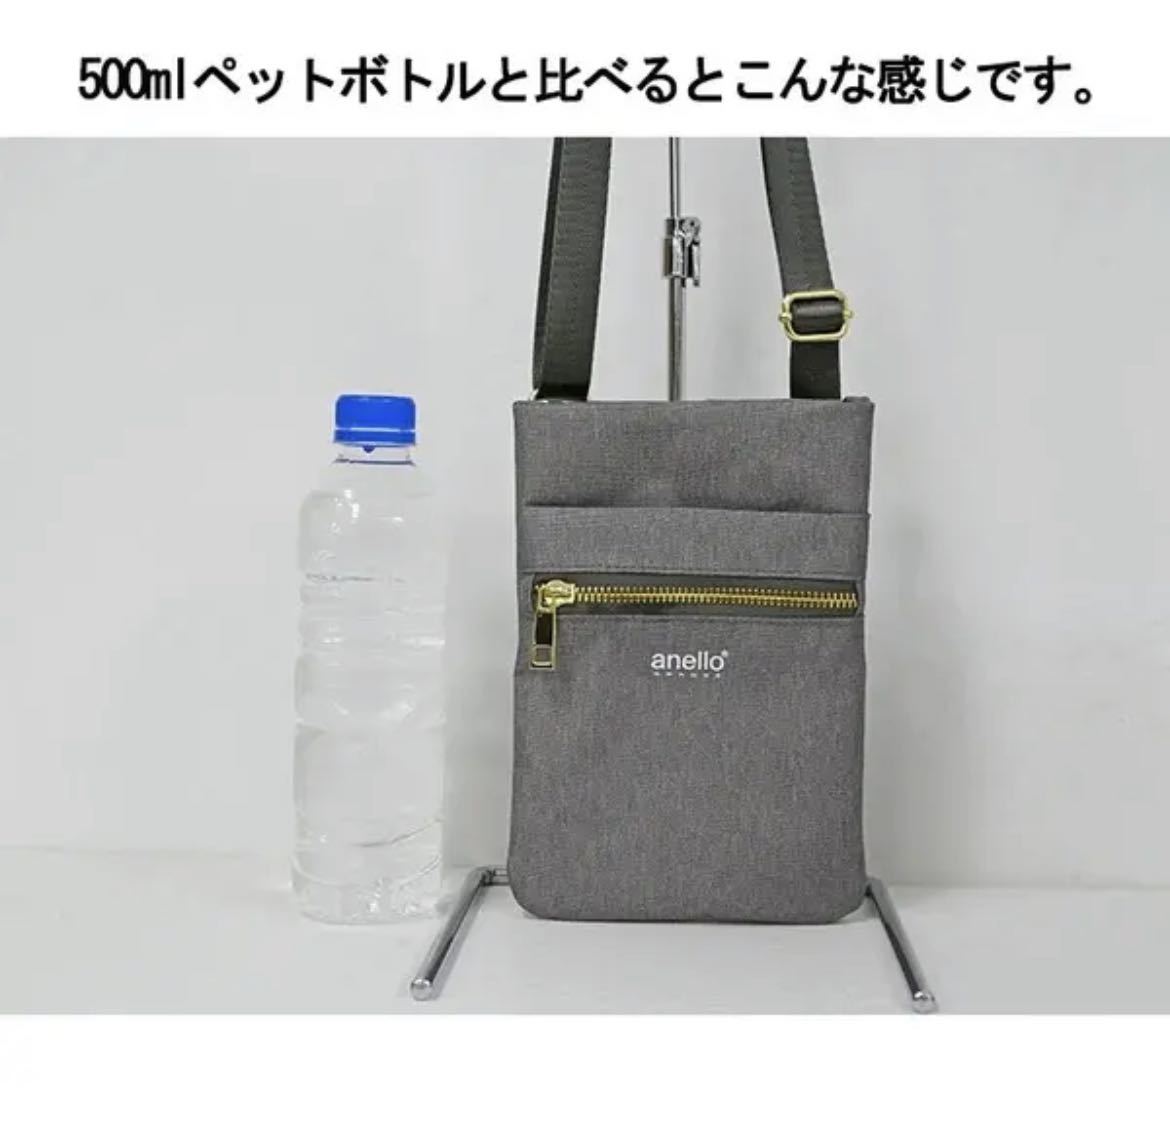 a Nero grande smartphone pouch smartphone shoulder empty-handed woman water-repellent light 